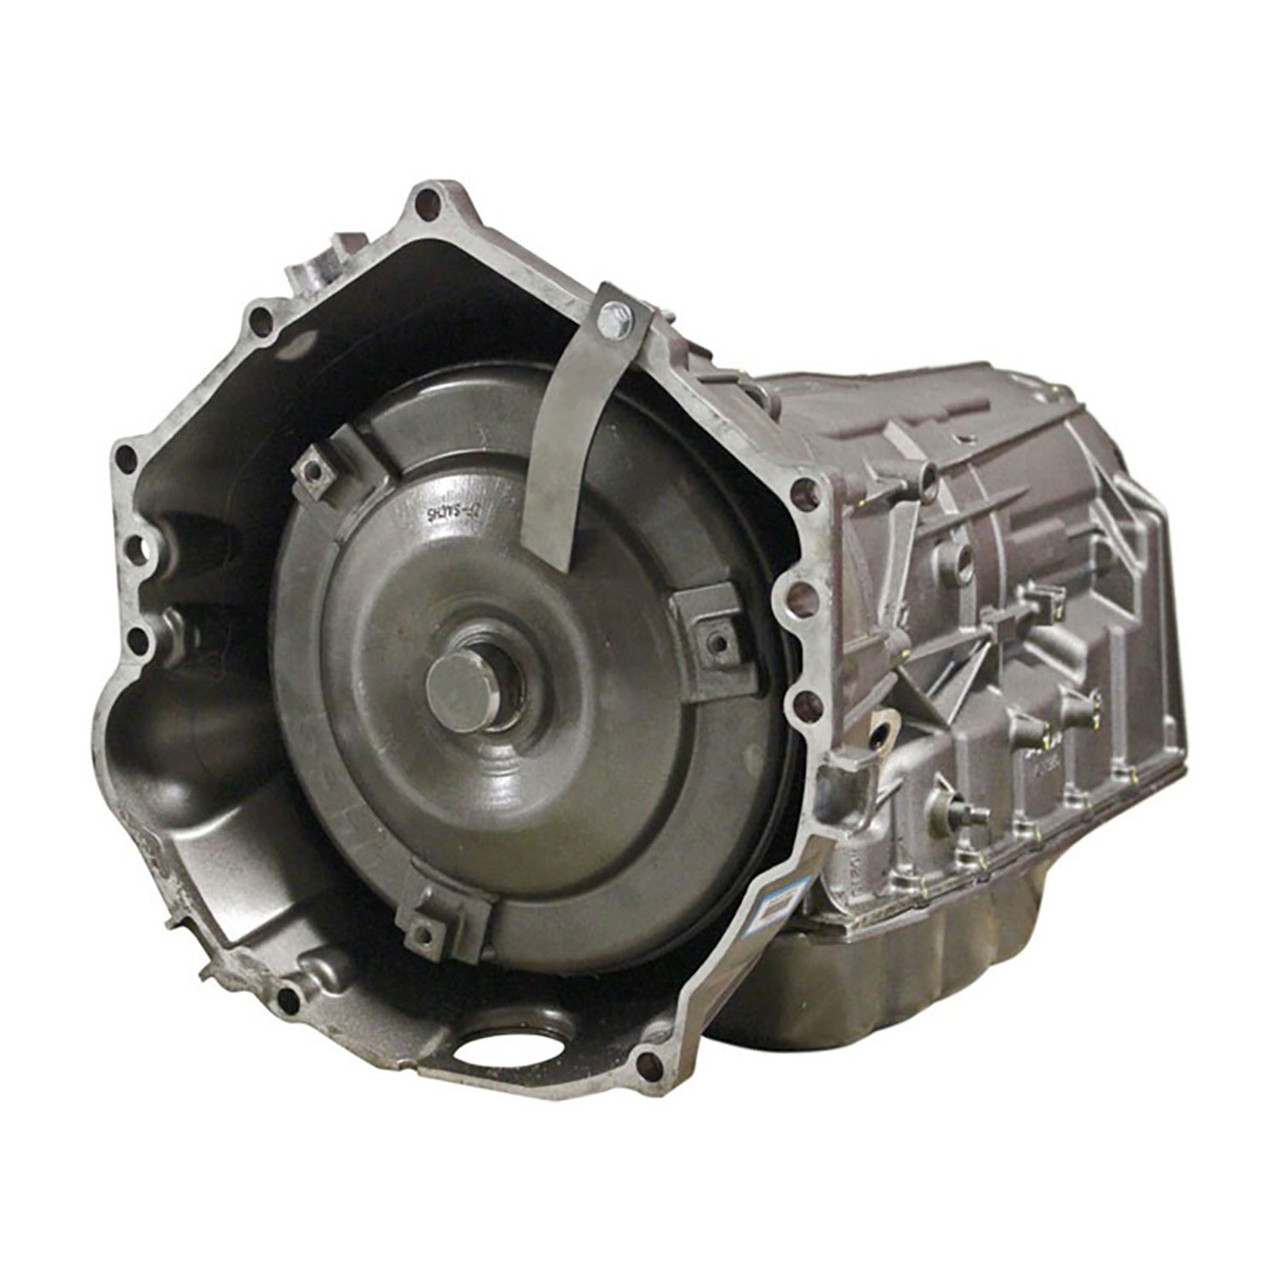 GM27 90 12V: Getriebemotor 27 mm, 90:1, 12 V DC bei reichelt